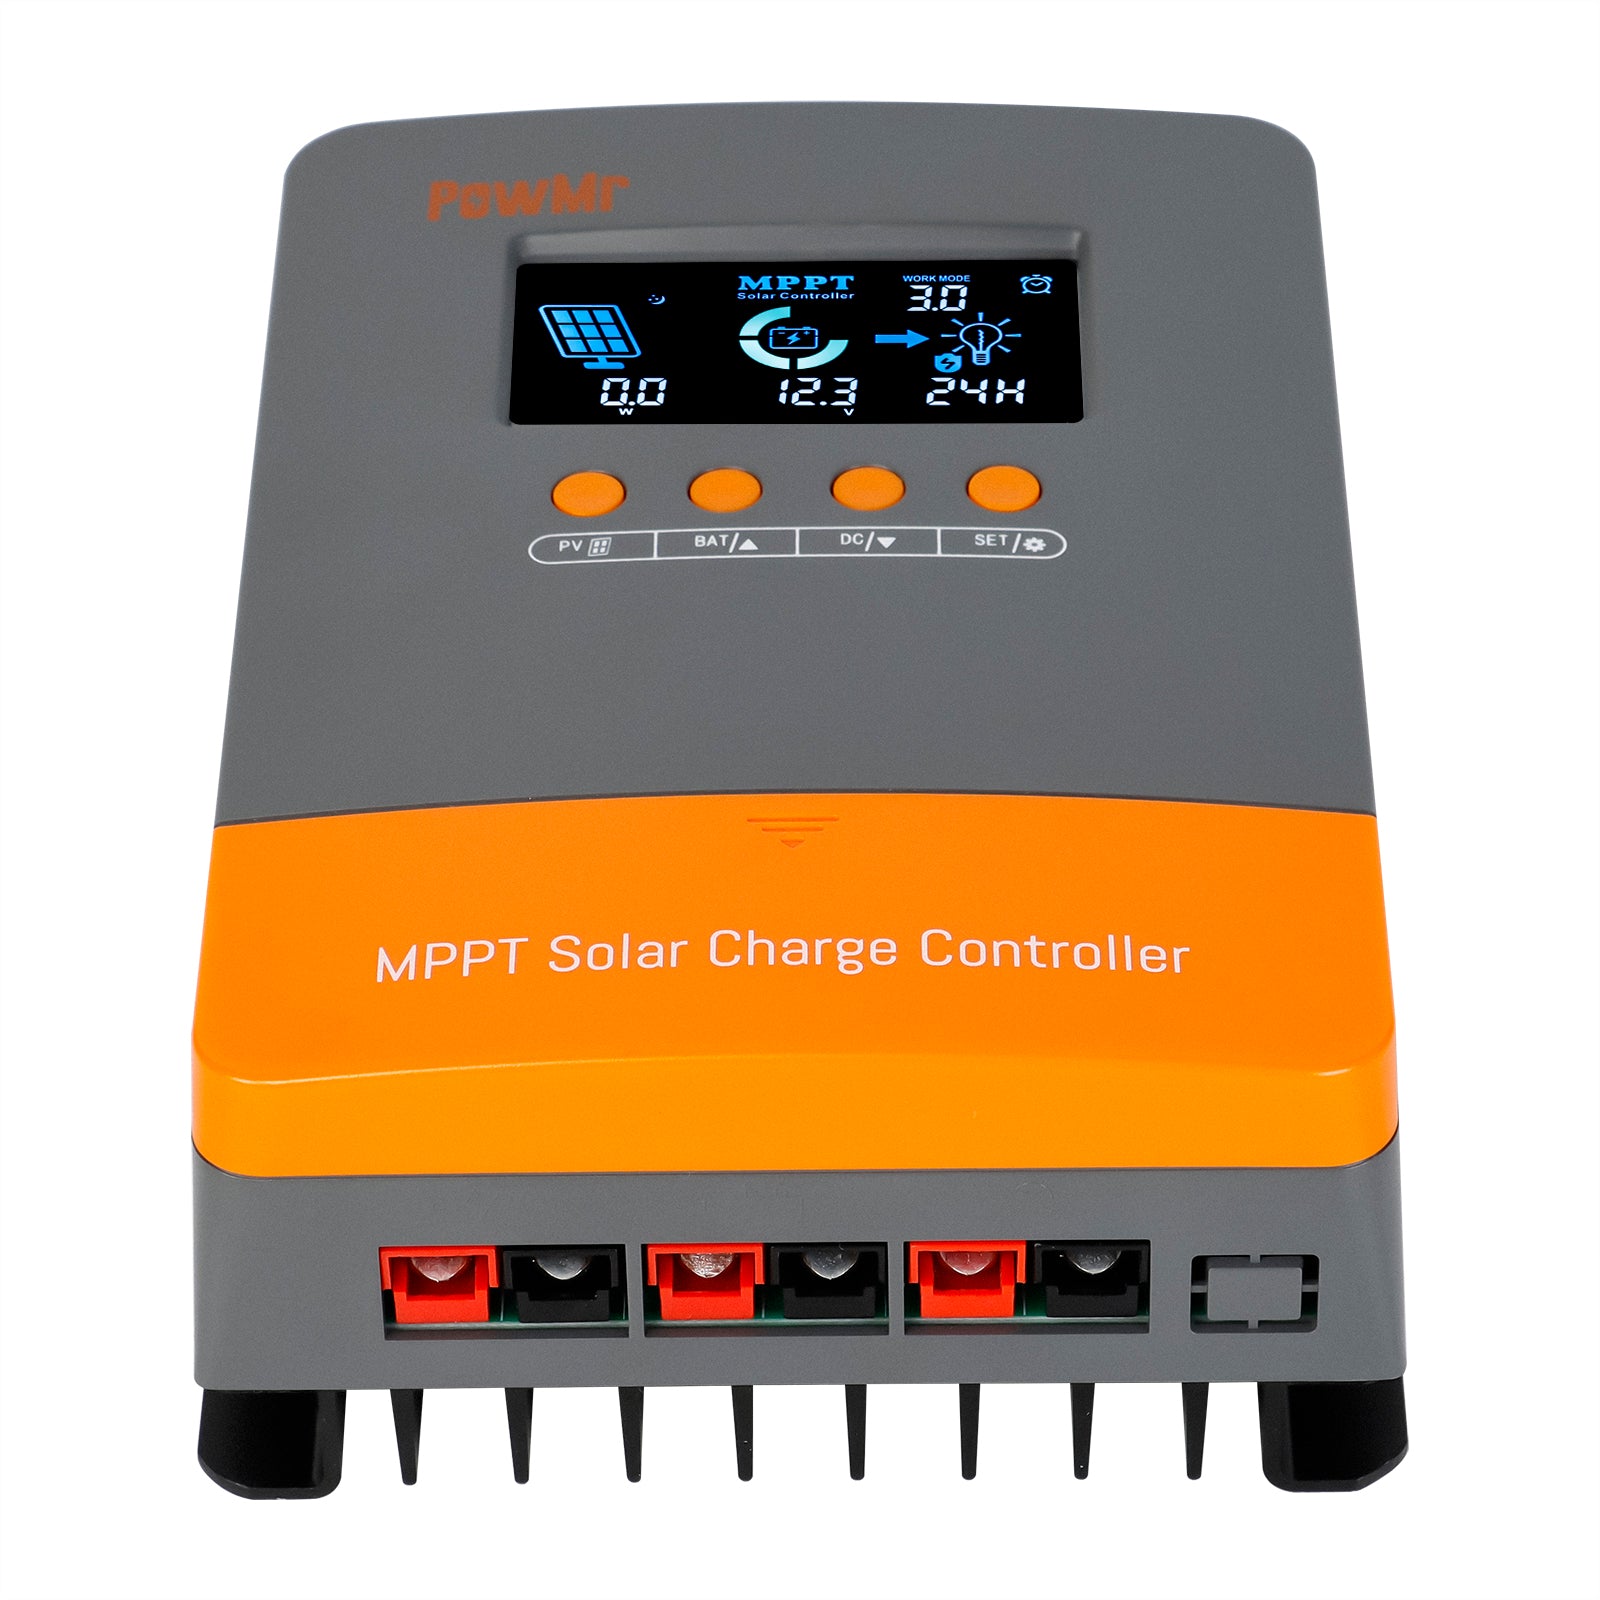 LiTime 60A MPPT 12V/24V/36V/48V Auto DC Input Solar Charge